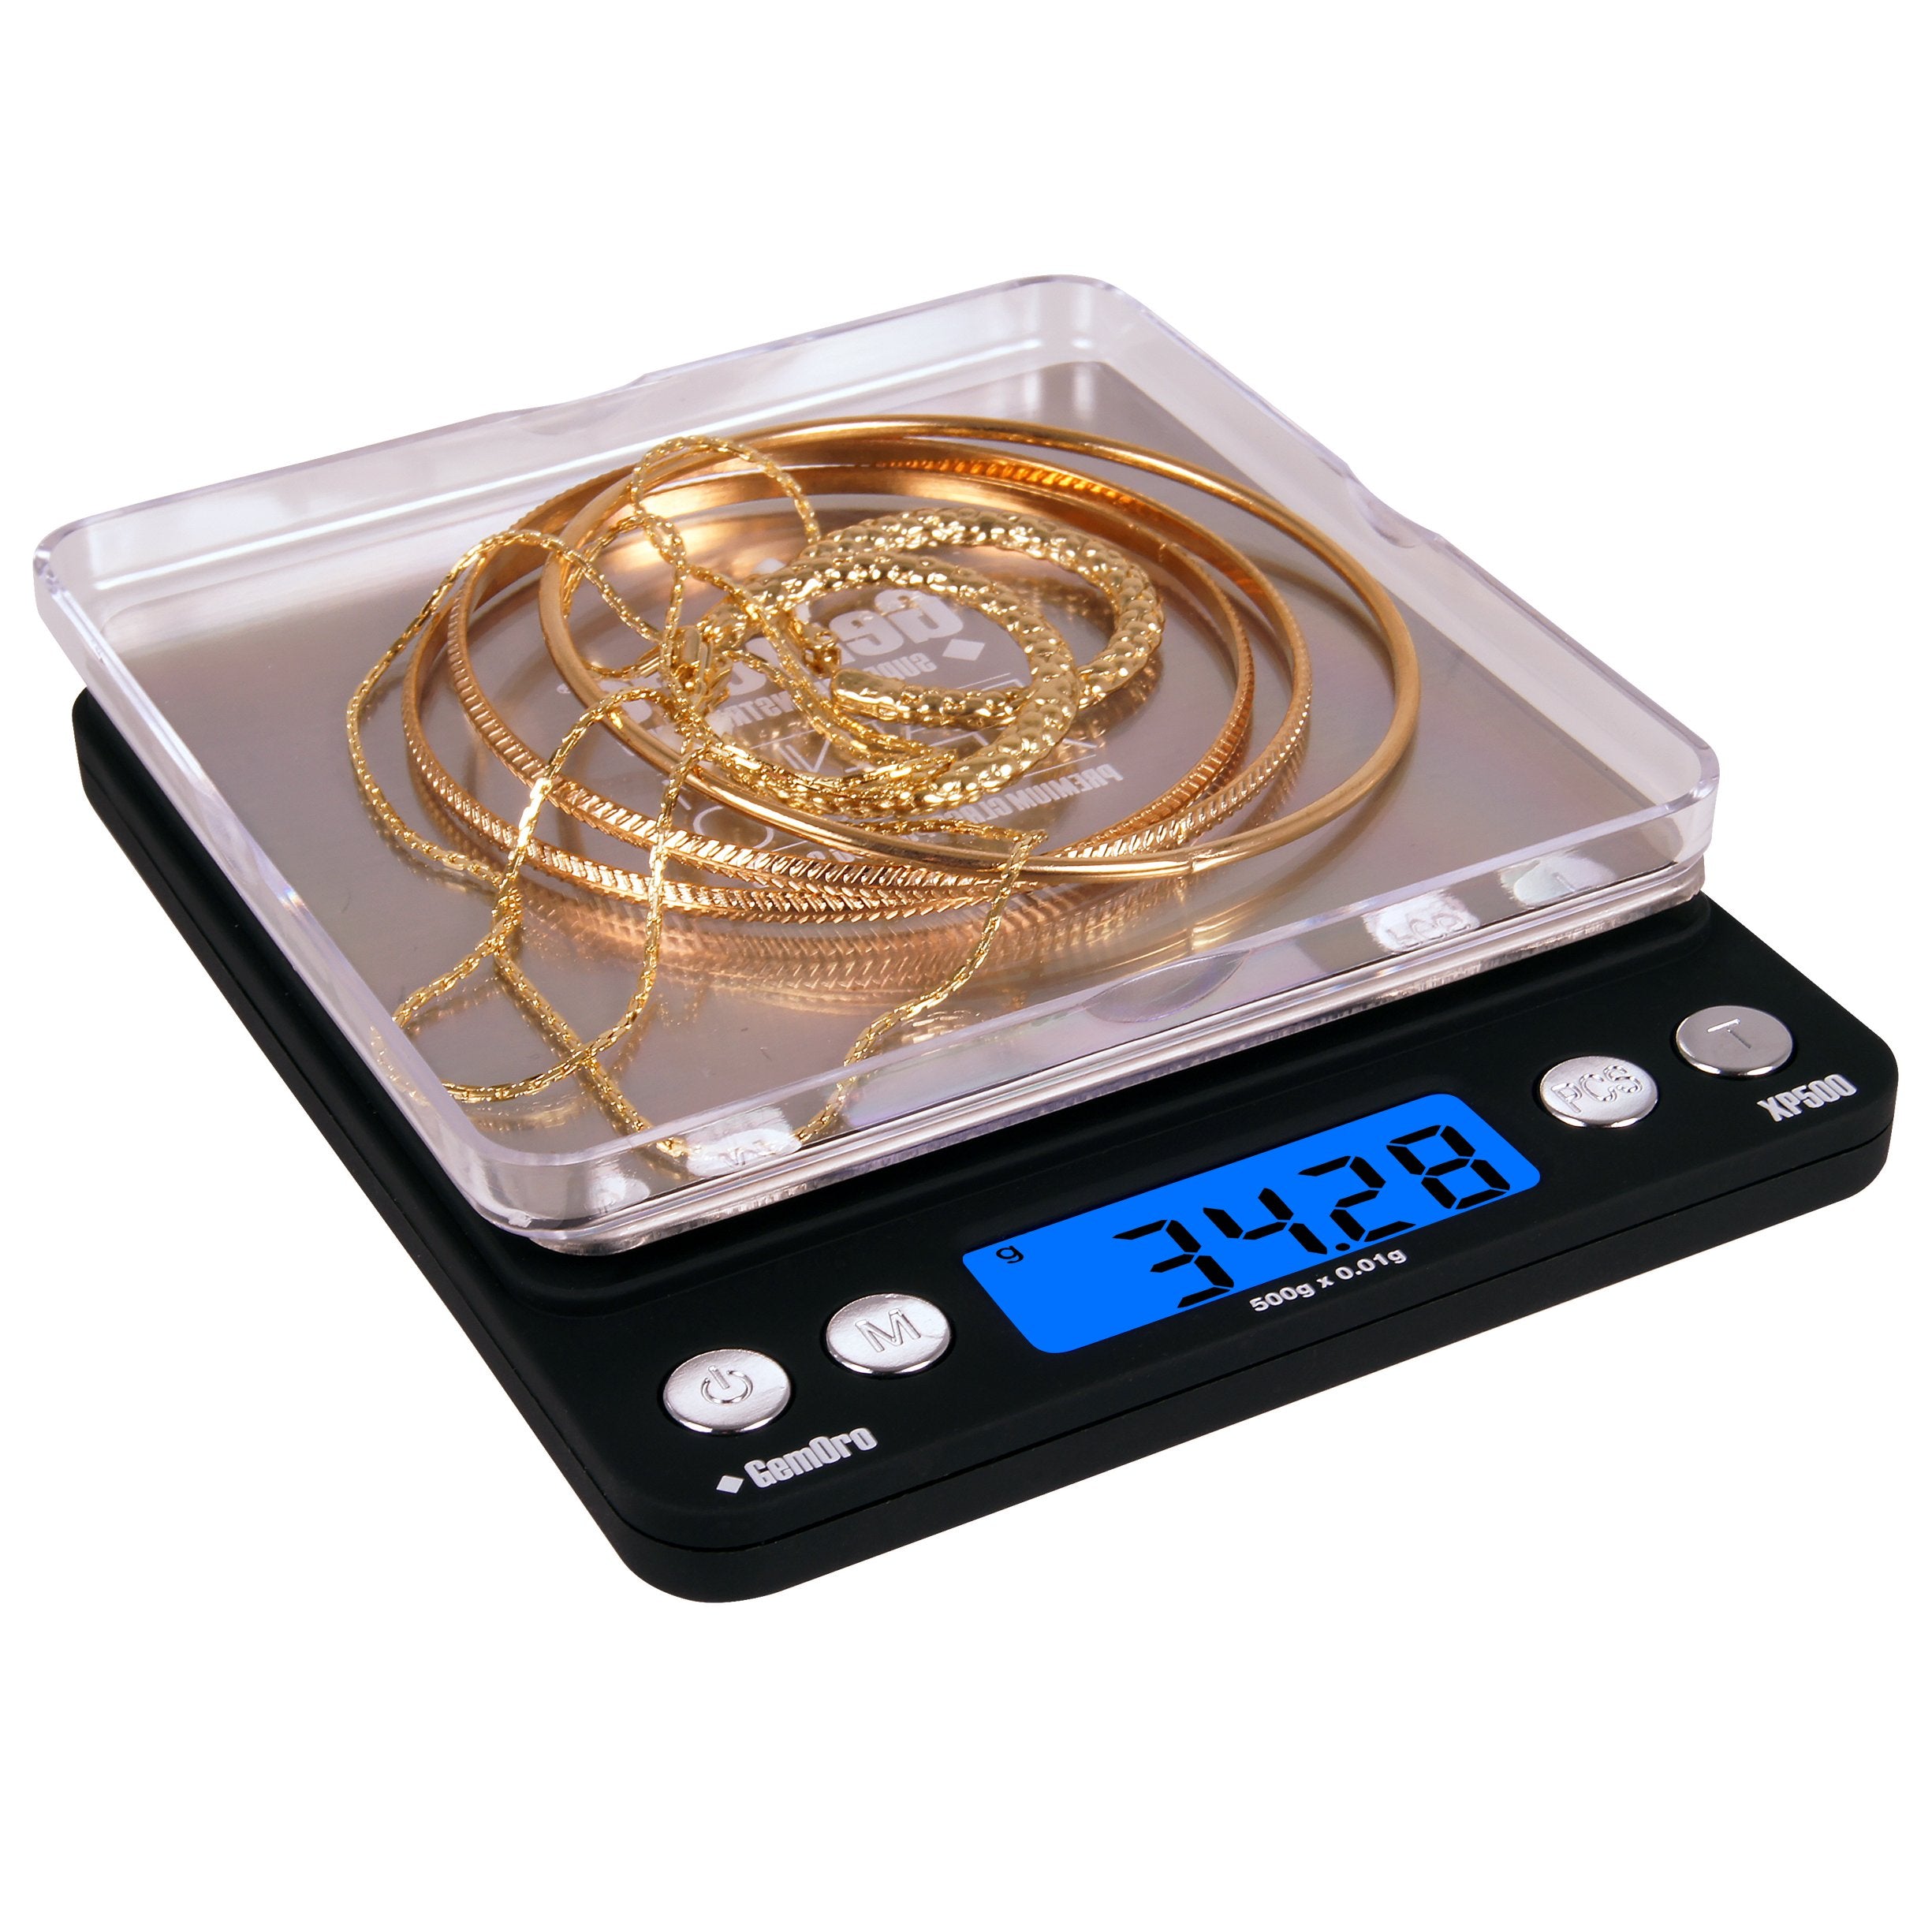 Gemoro Platinum XP500 Precision Gold Scale